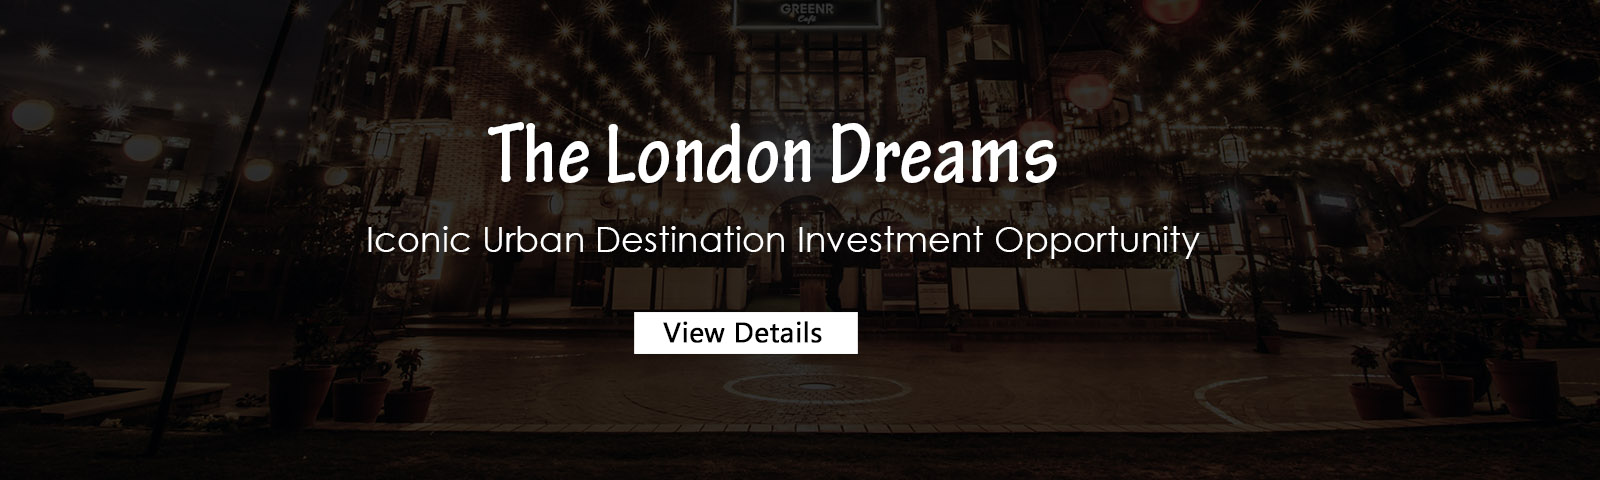 The London Dreams